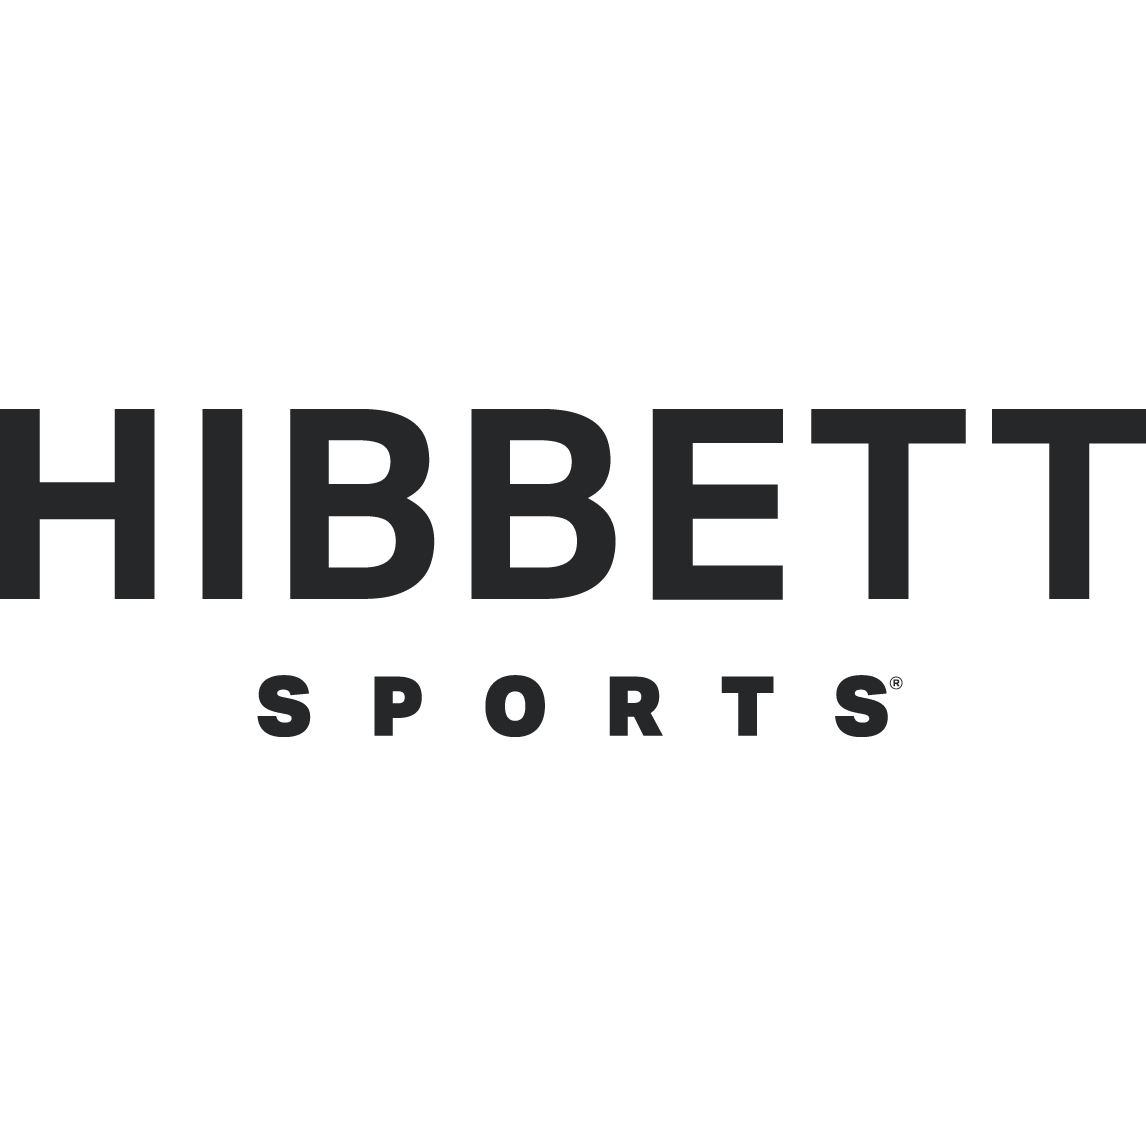 Columbia Sports Logo - Hibbett Sports, MS. Hibbett.com 731 2043